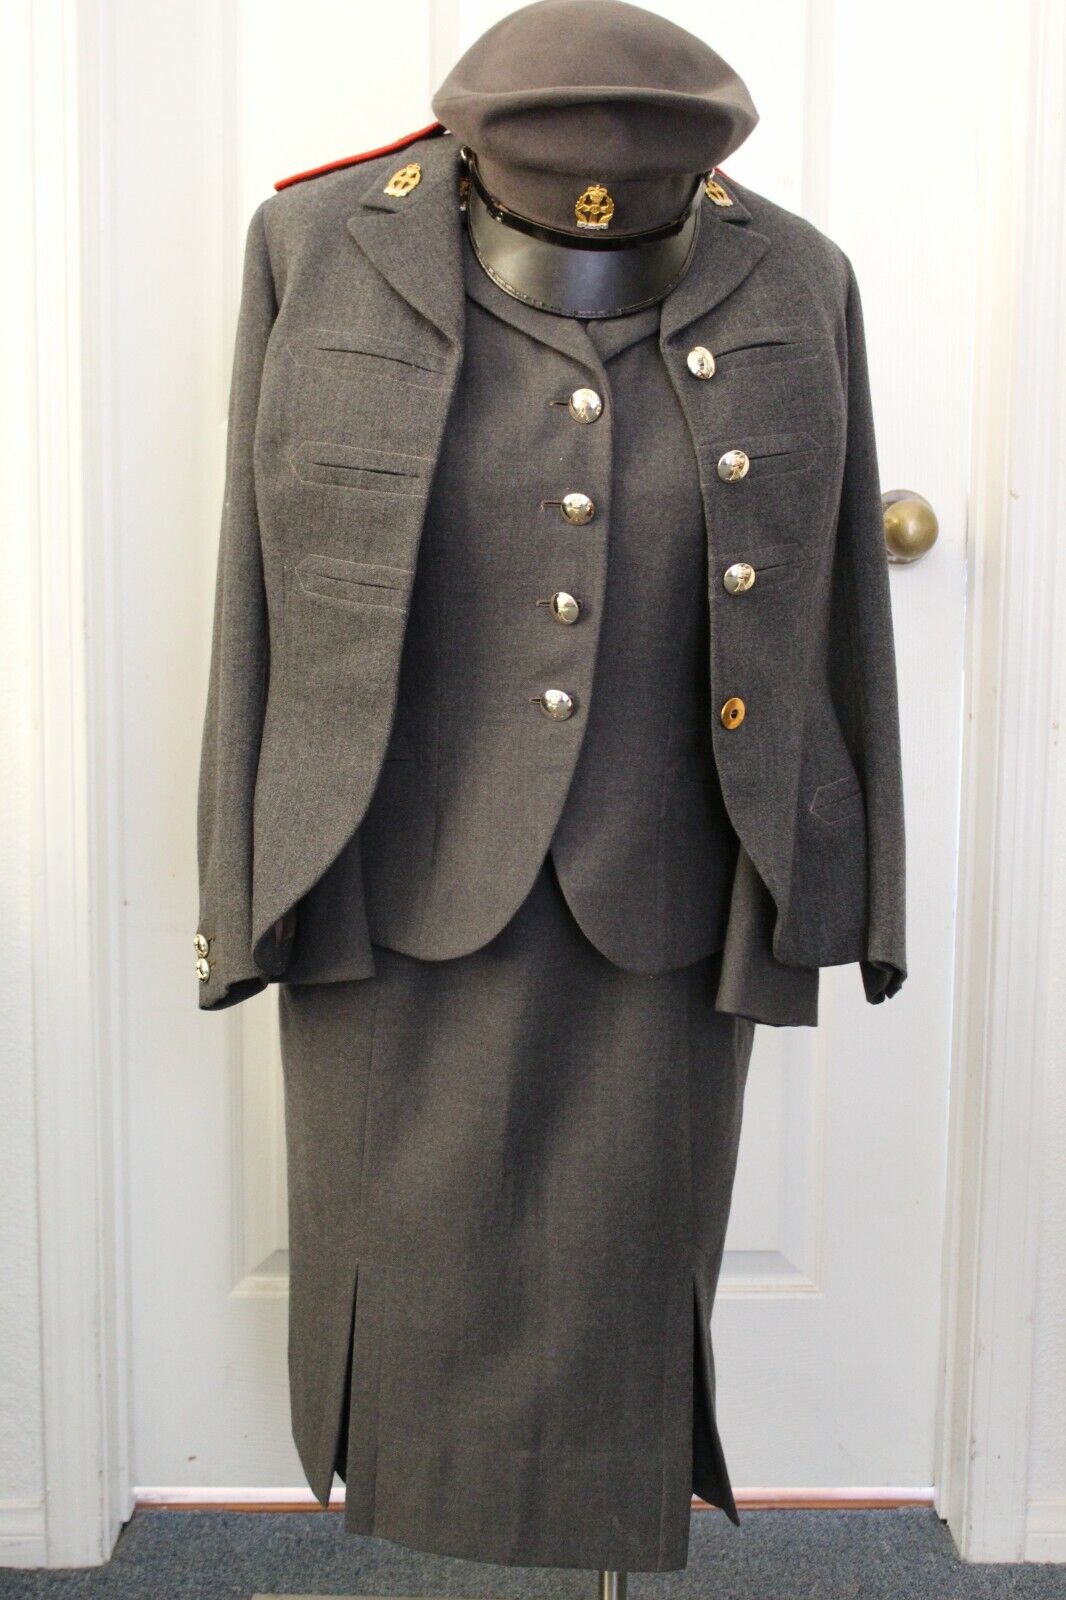 WW2 British Army Womens Nursing Corps QARANC Uniform with 2 Jackets Skirt Hat an